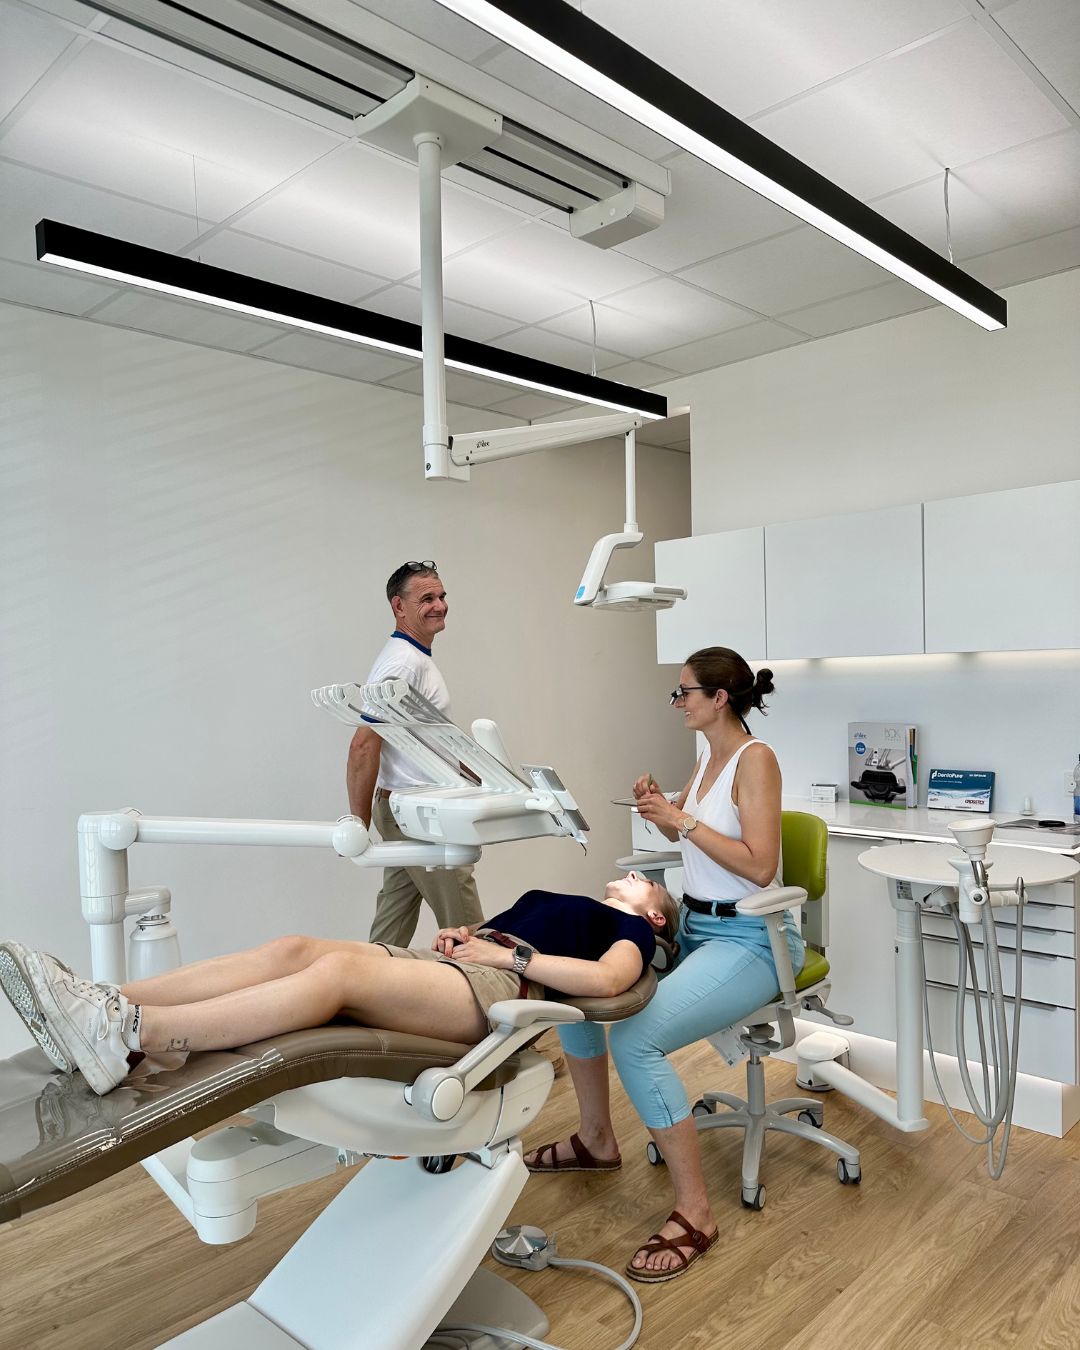 Goodguys dental praxisbeleuchtung showroom - Frankfurt region